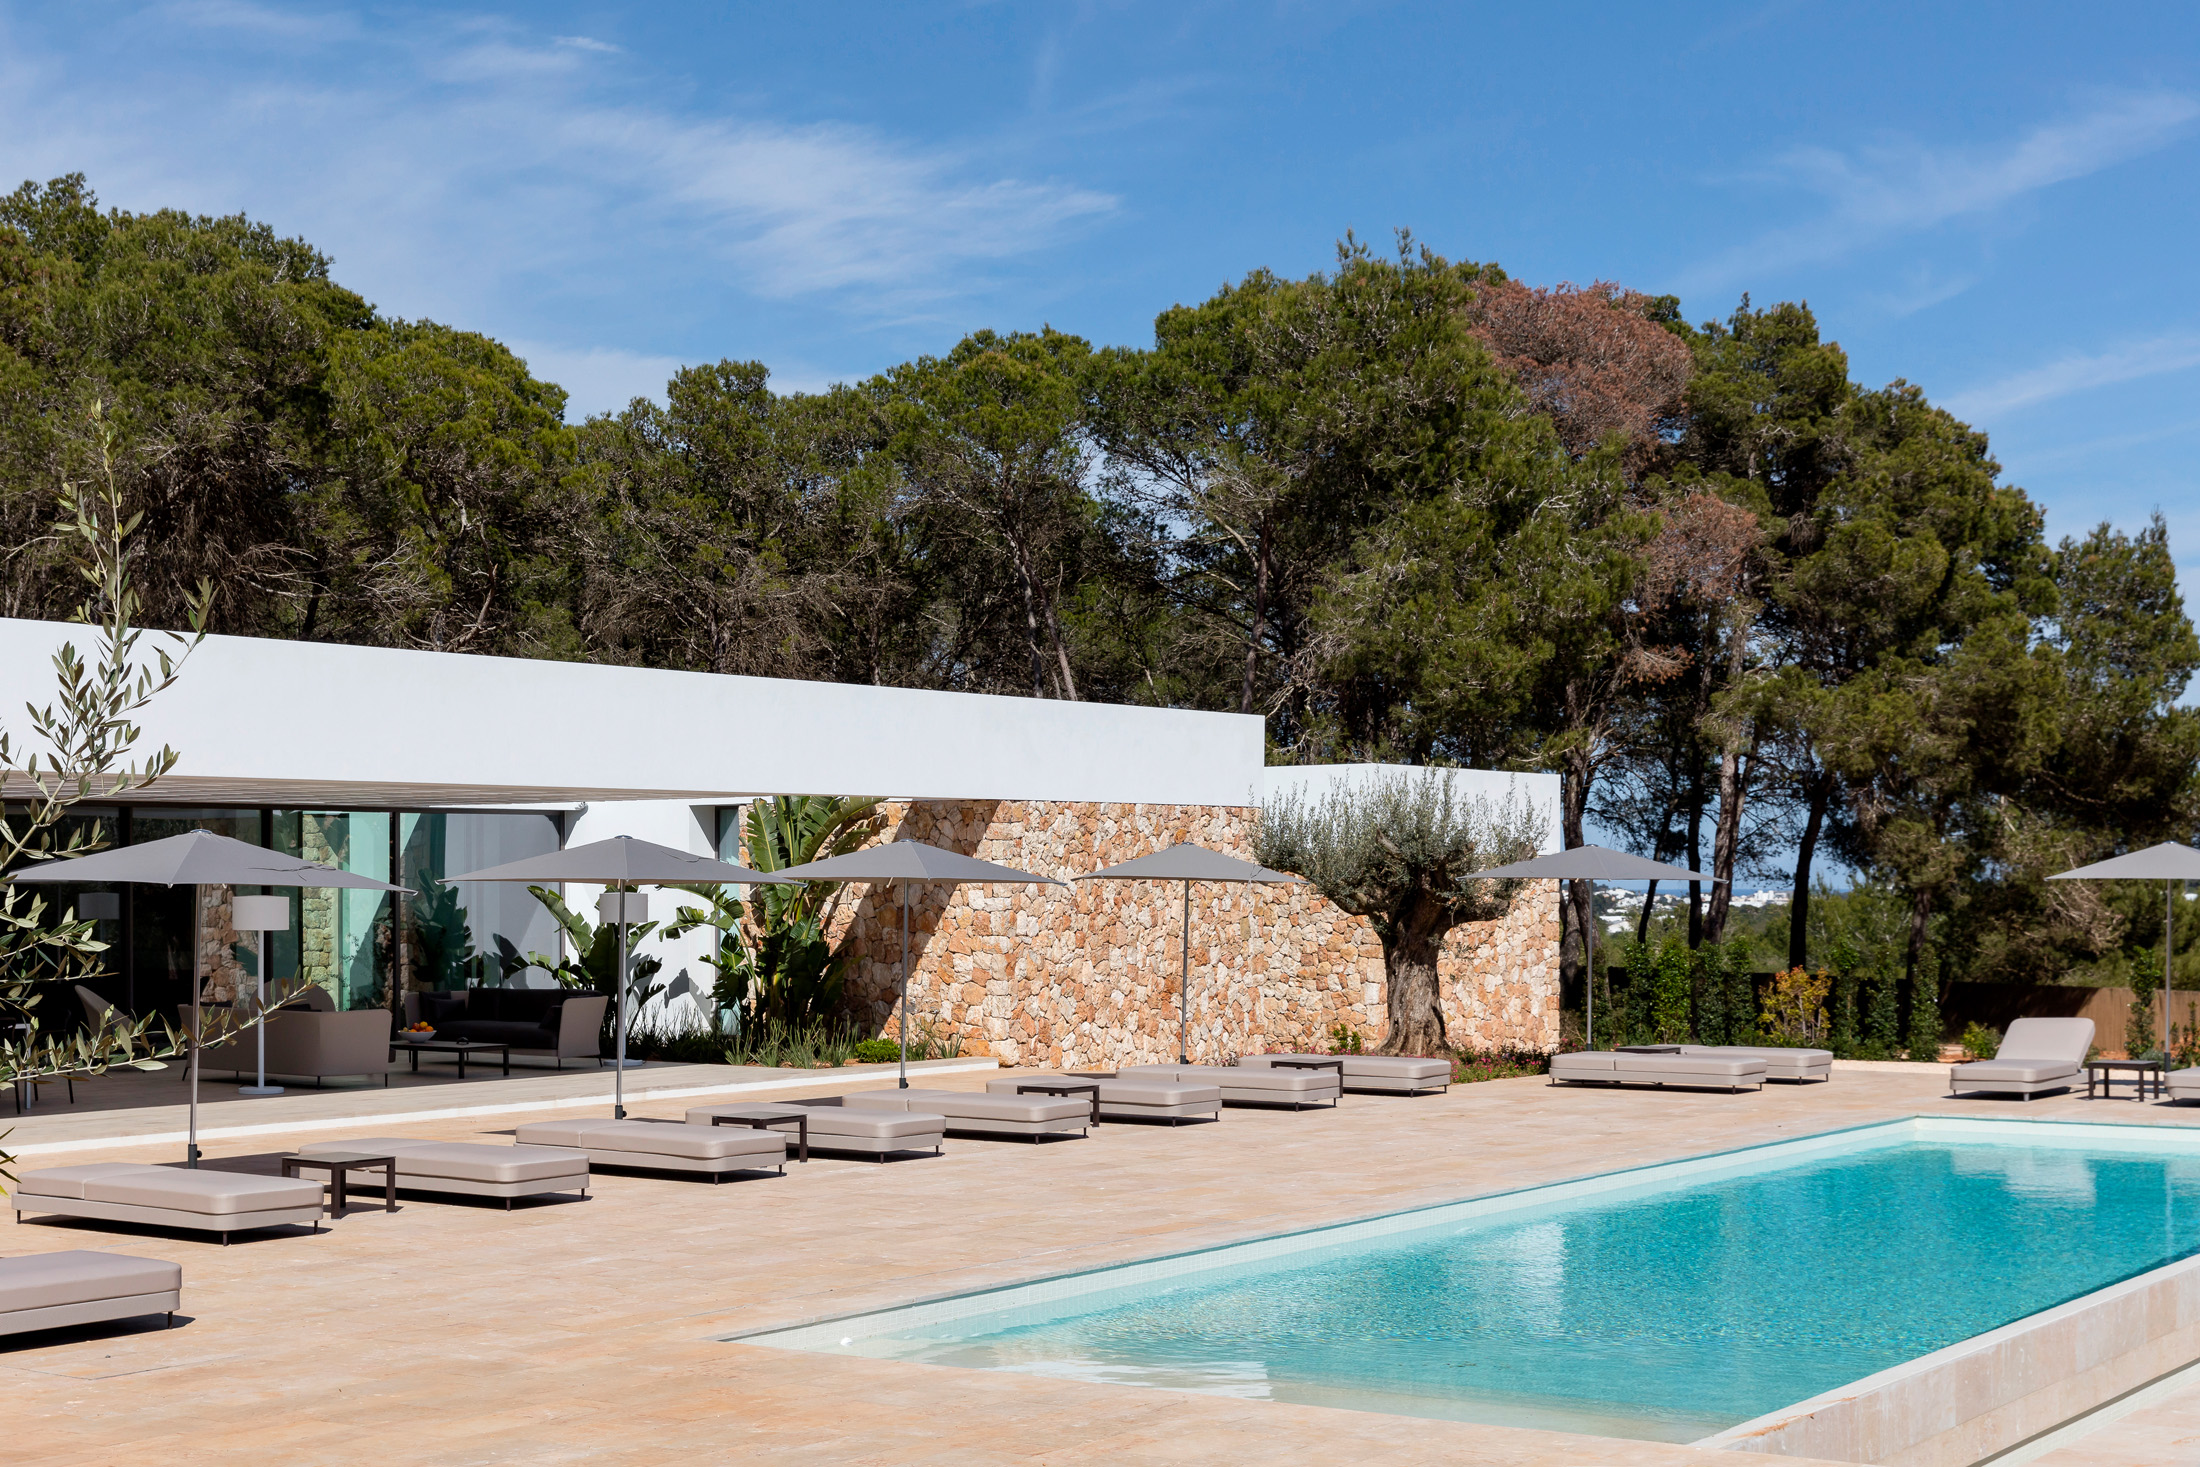 Sun loungers next to a pool at an Ibiza rental villa